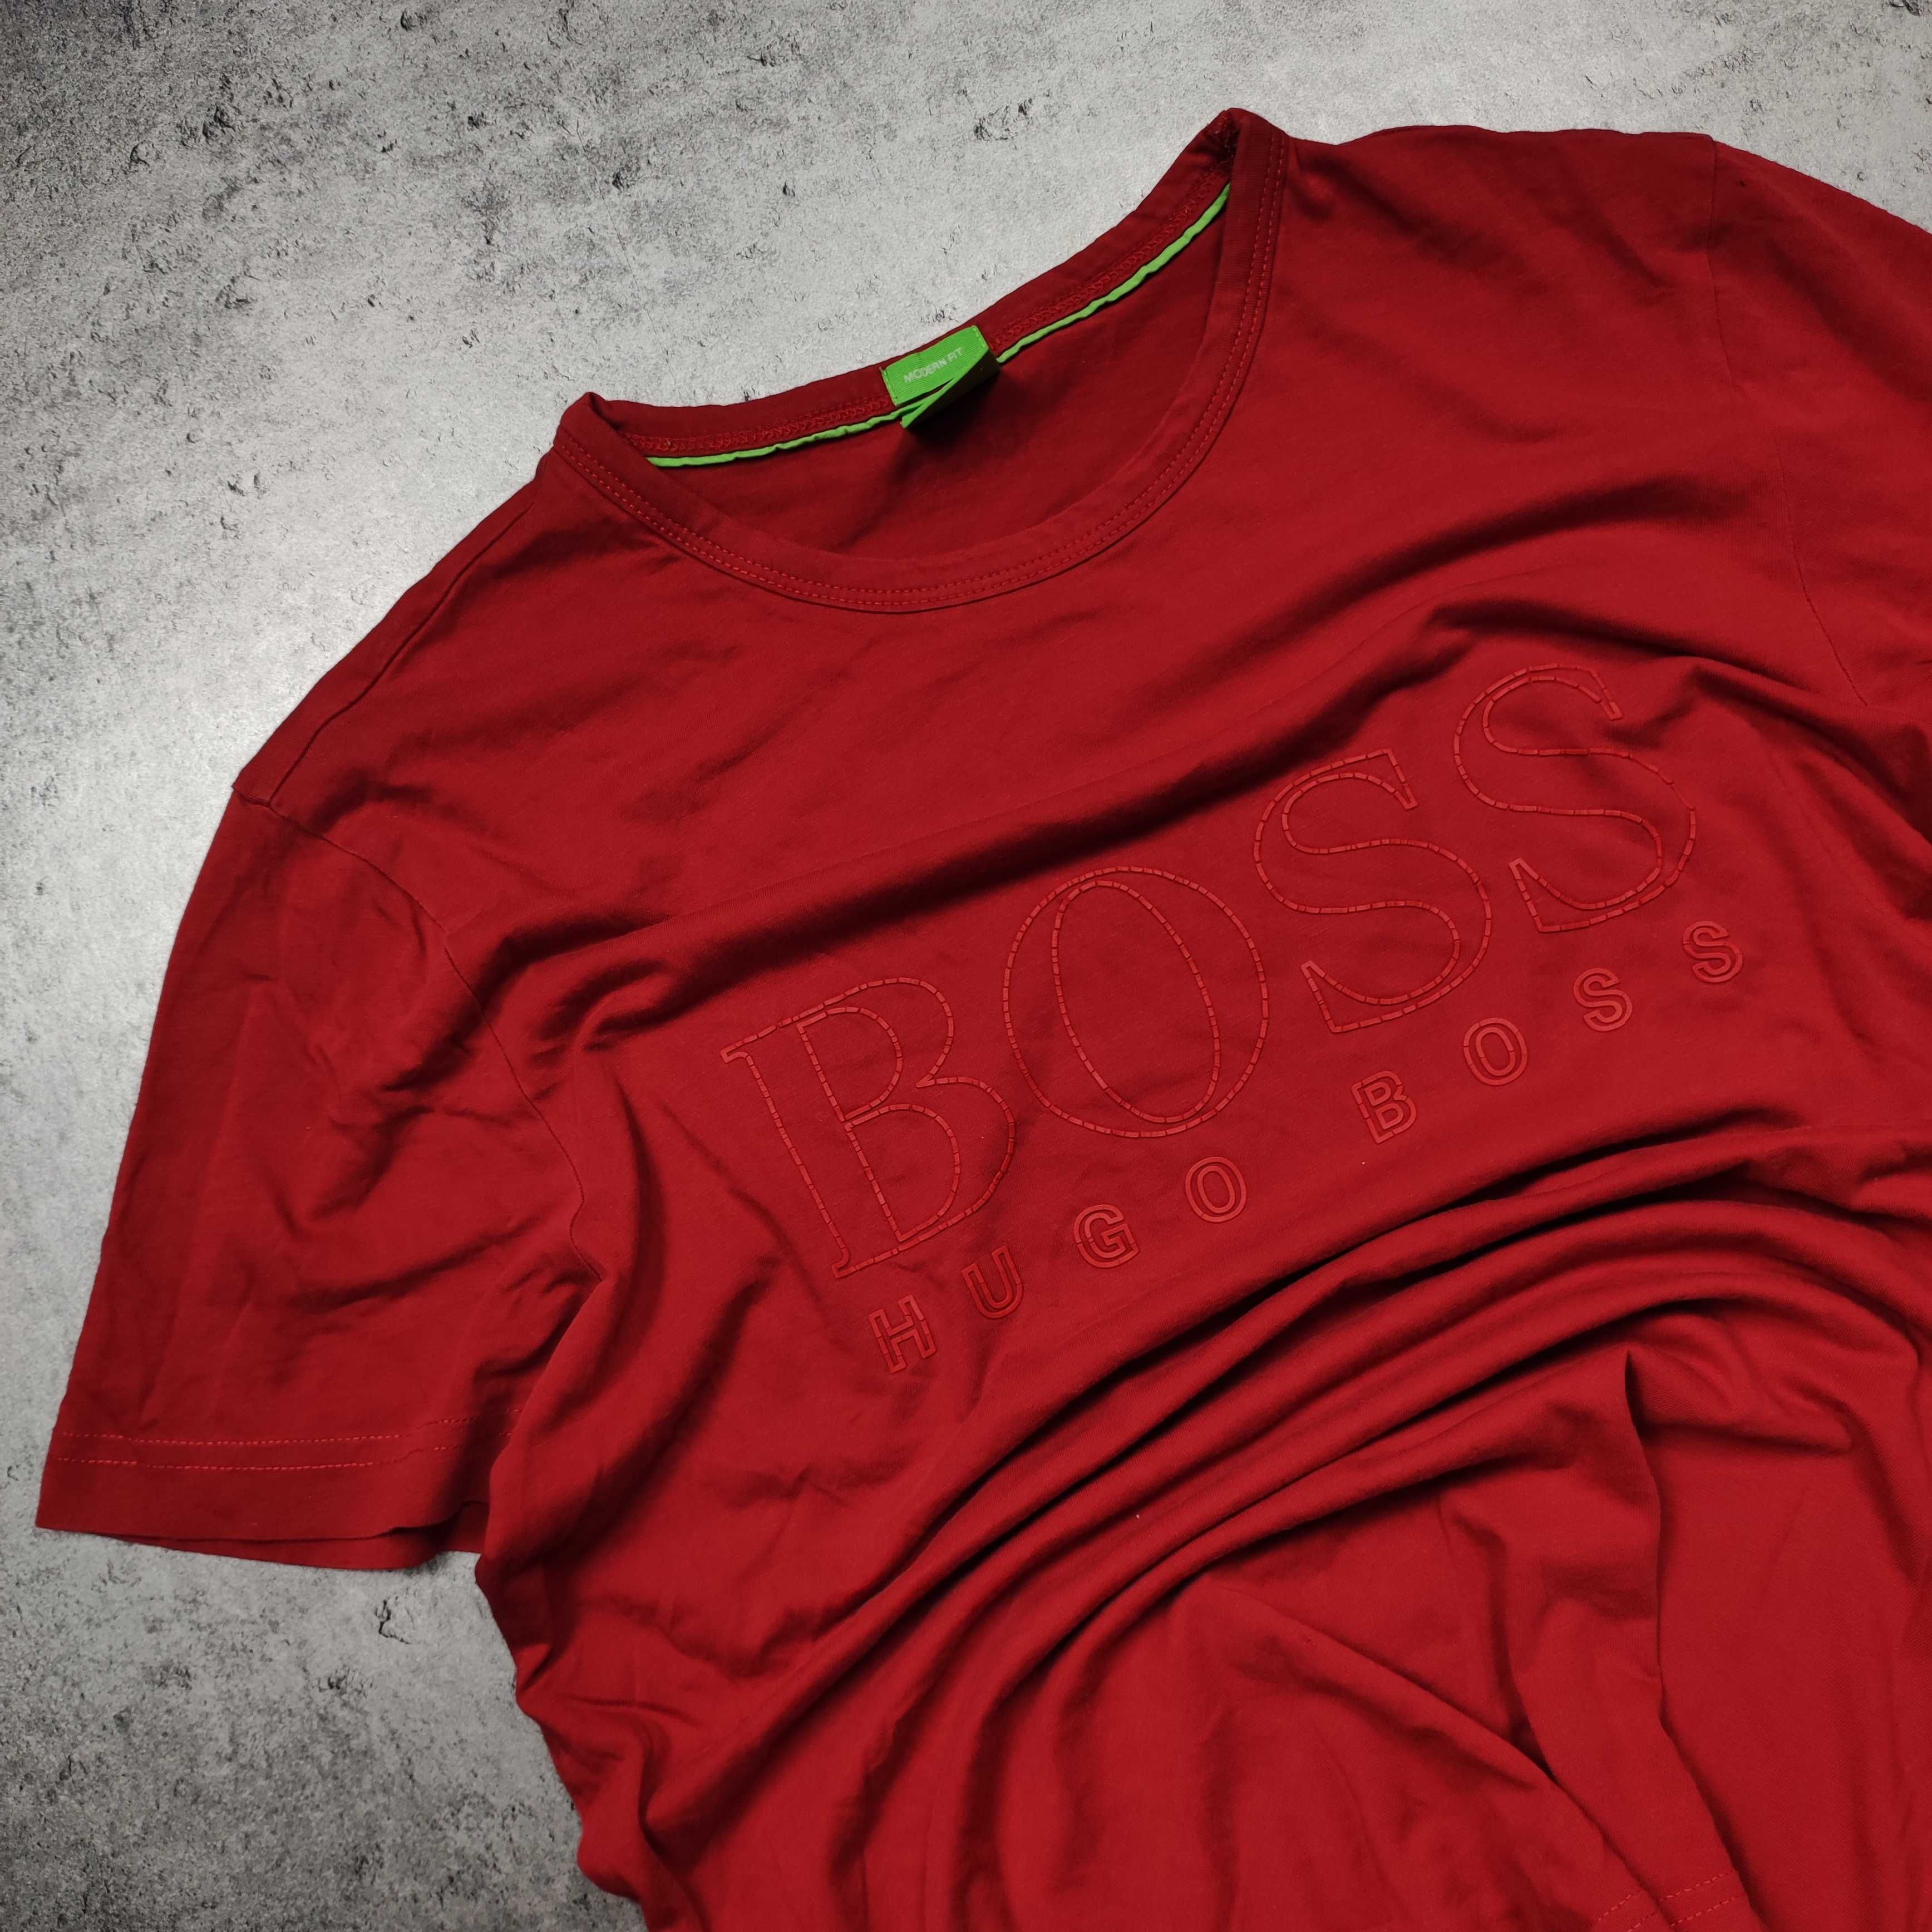 MĘSKA Premium Koszulka Czerwona Bawełna Hugo Boss Duże Logo 3D LUXURY